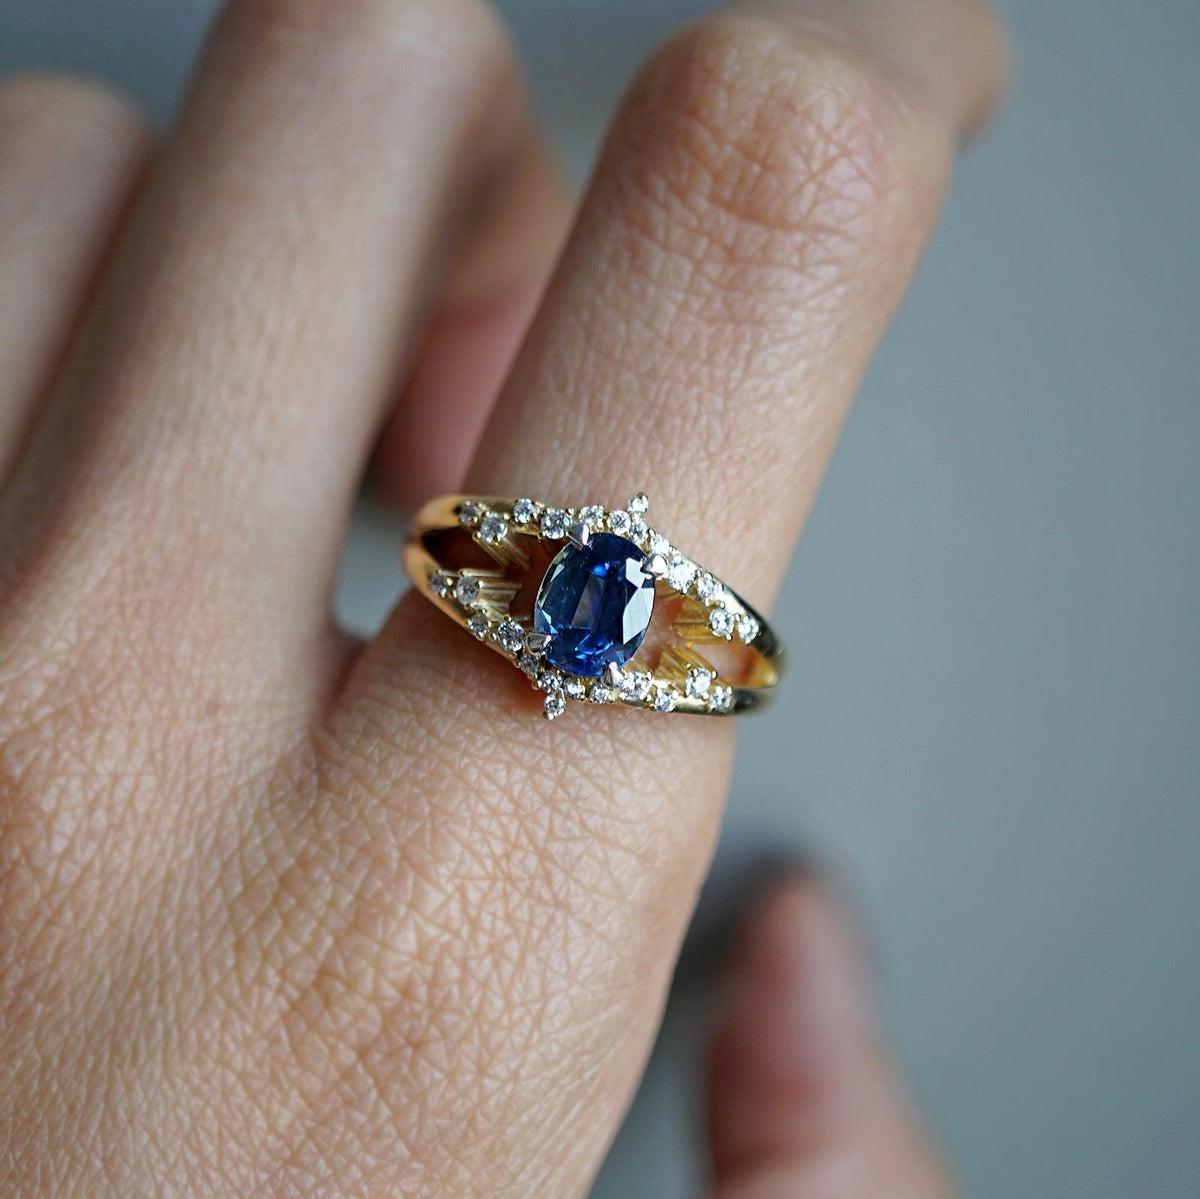 Celestial Blue Sapphire Diamond Ring in 14K and 18K Gold